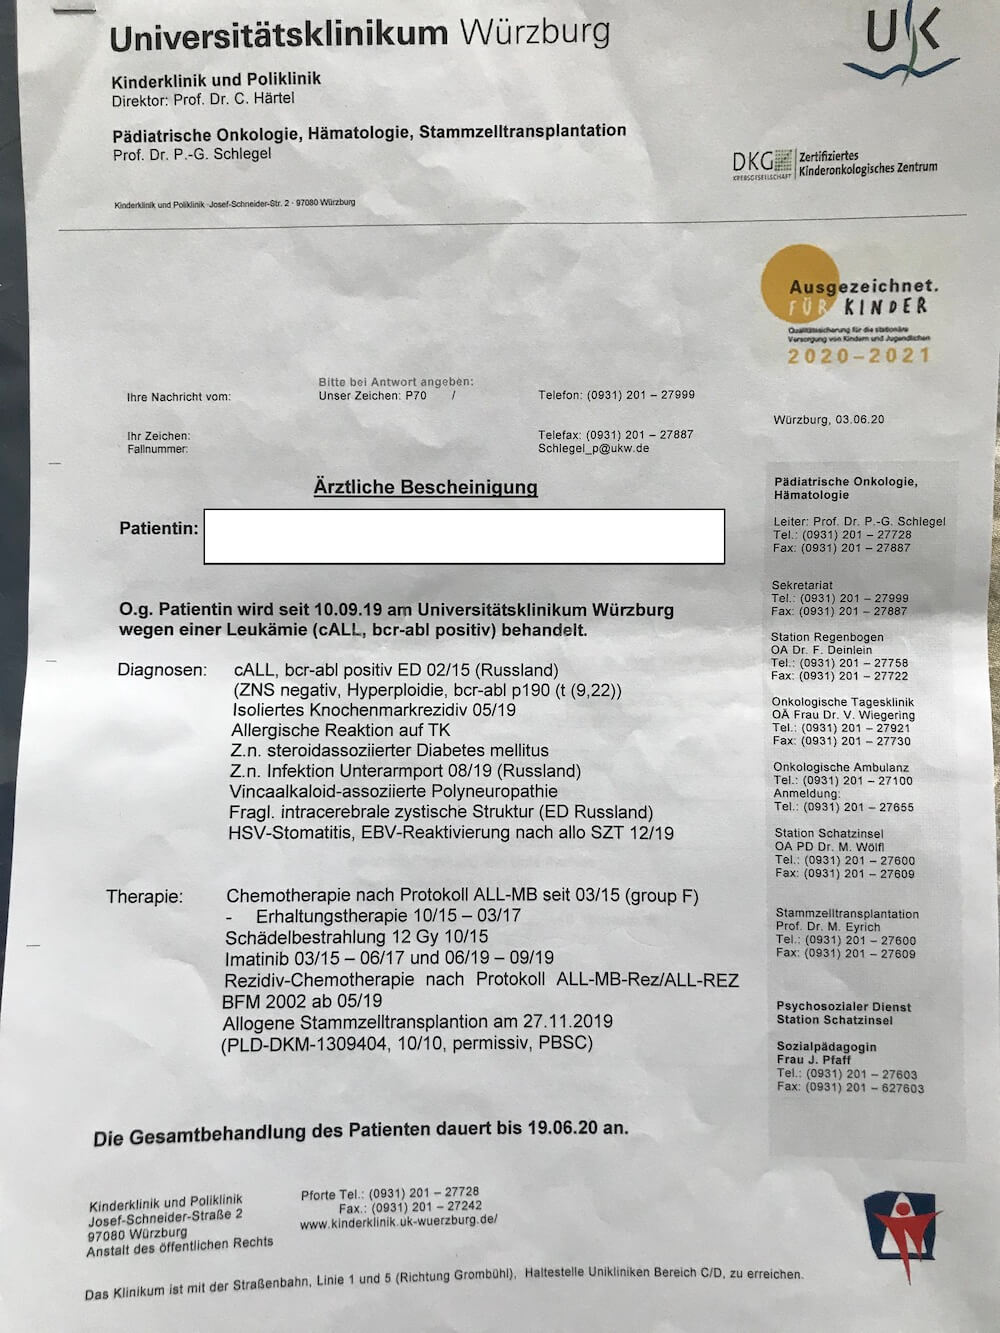 A medical certificate in German before translation